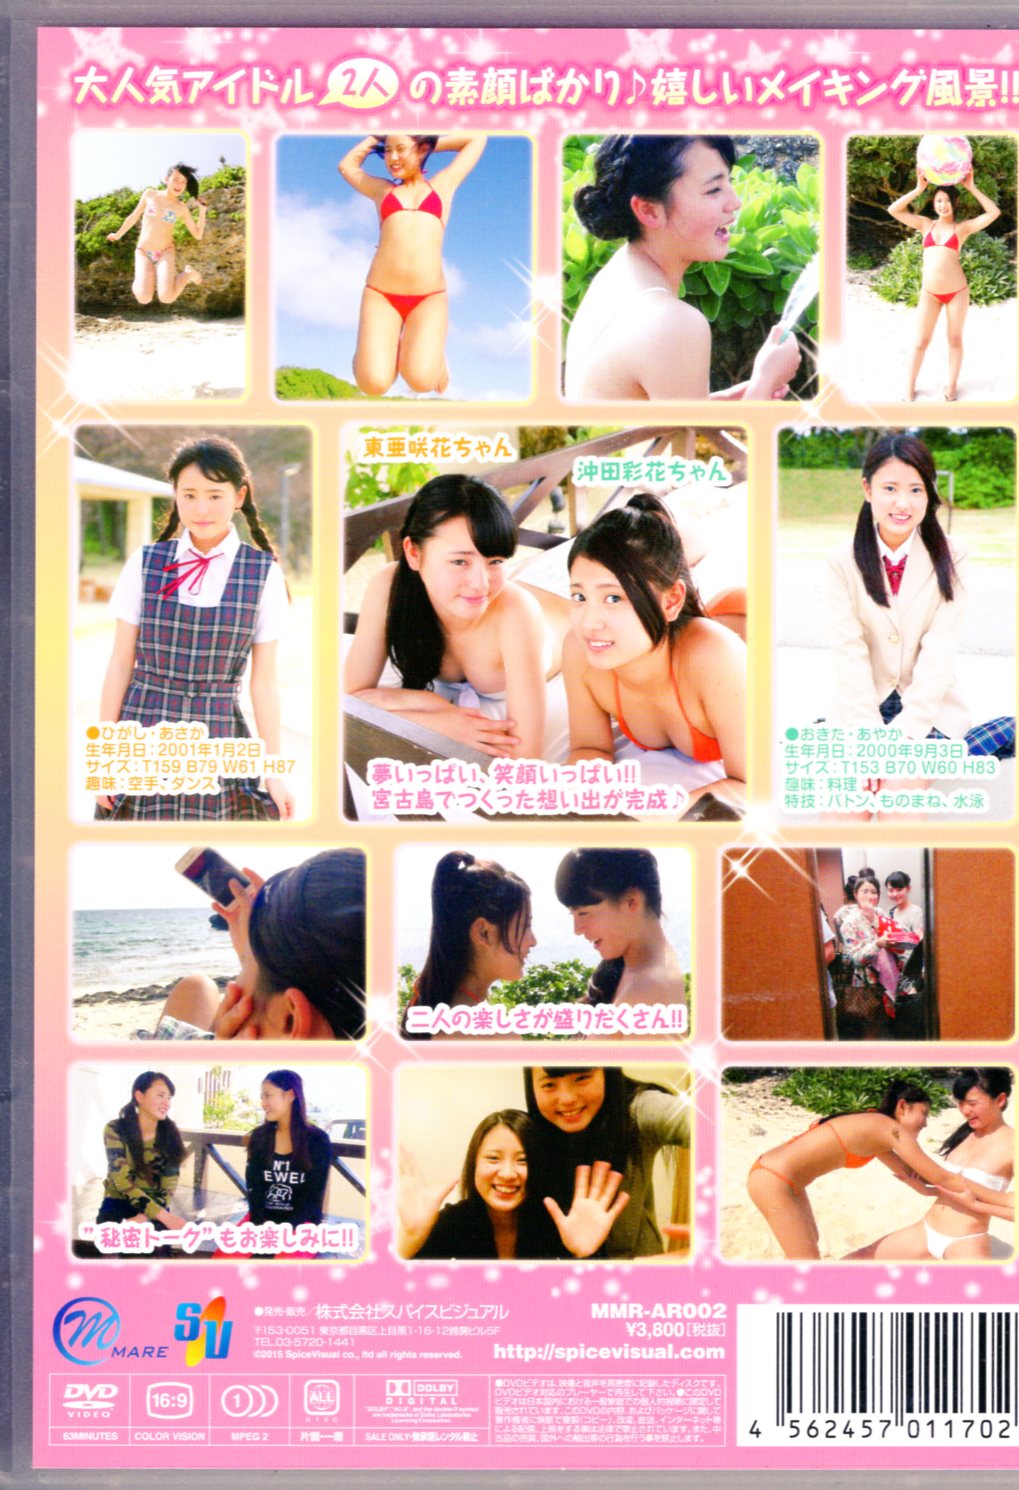 DVD] 美少女伝説 東亜咲花 『あさかと一緒』 MMR-383 - DVD